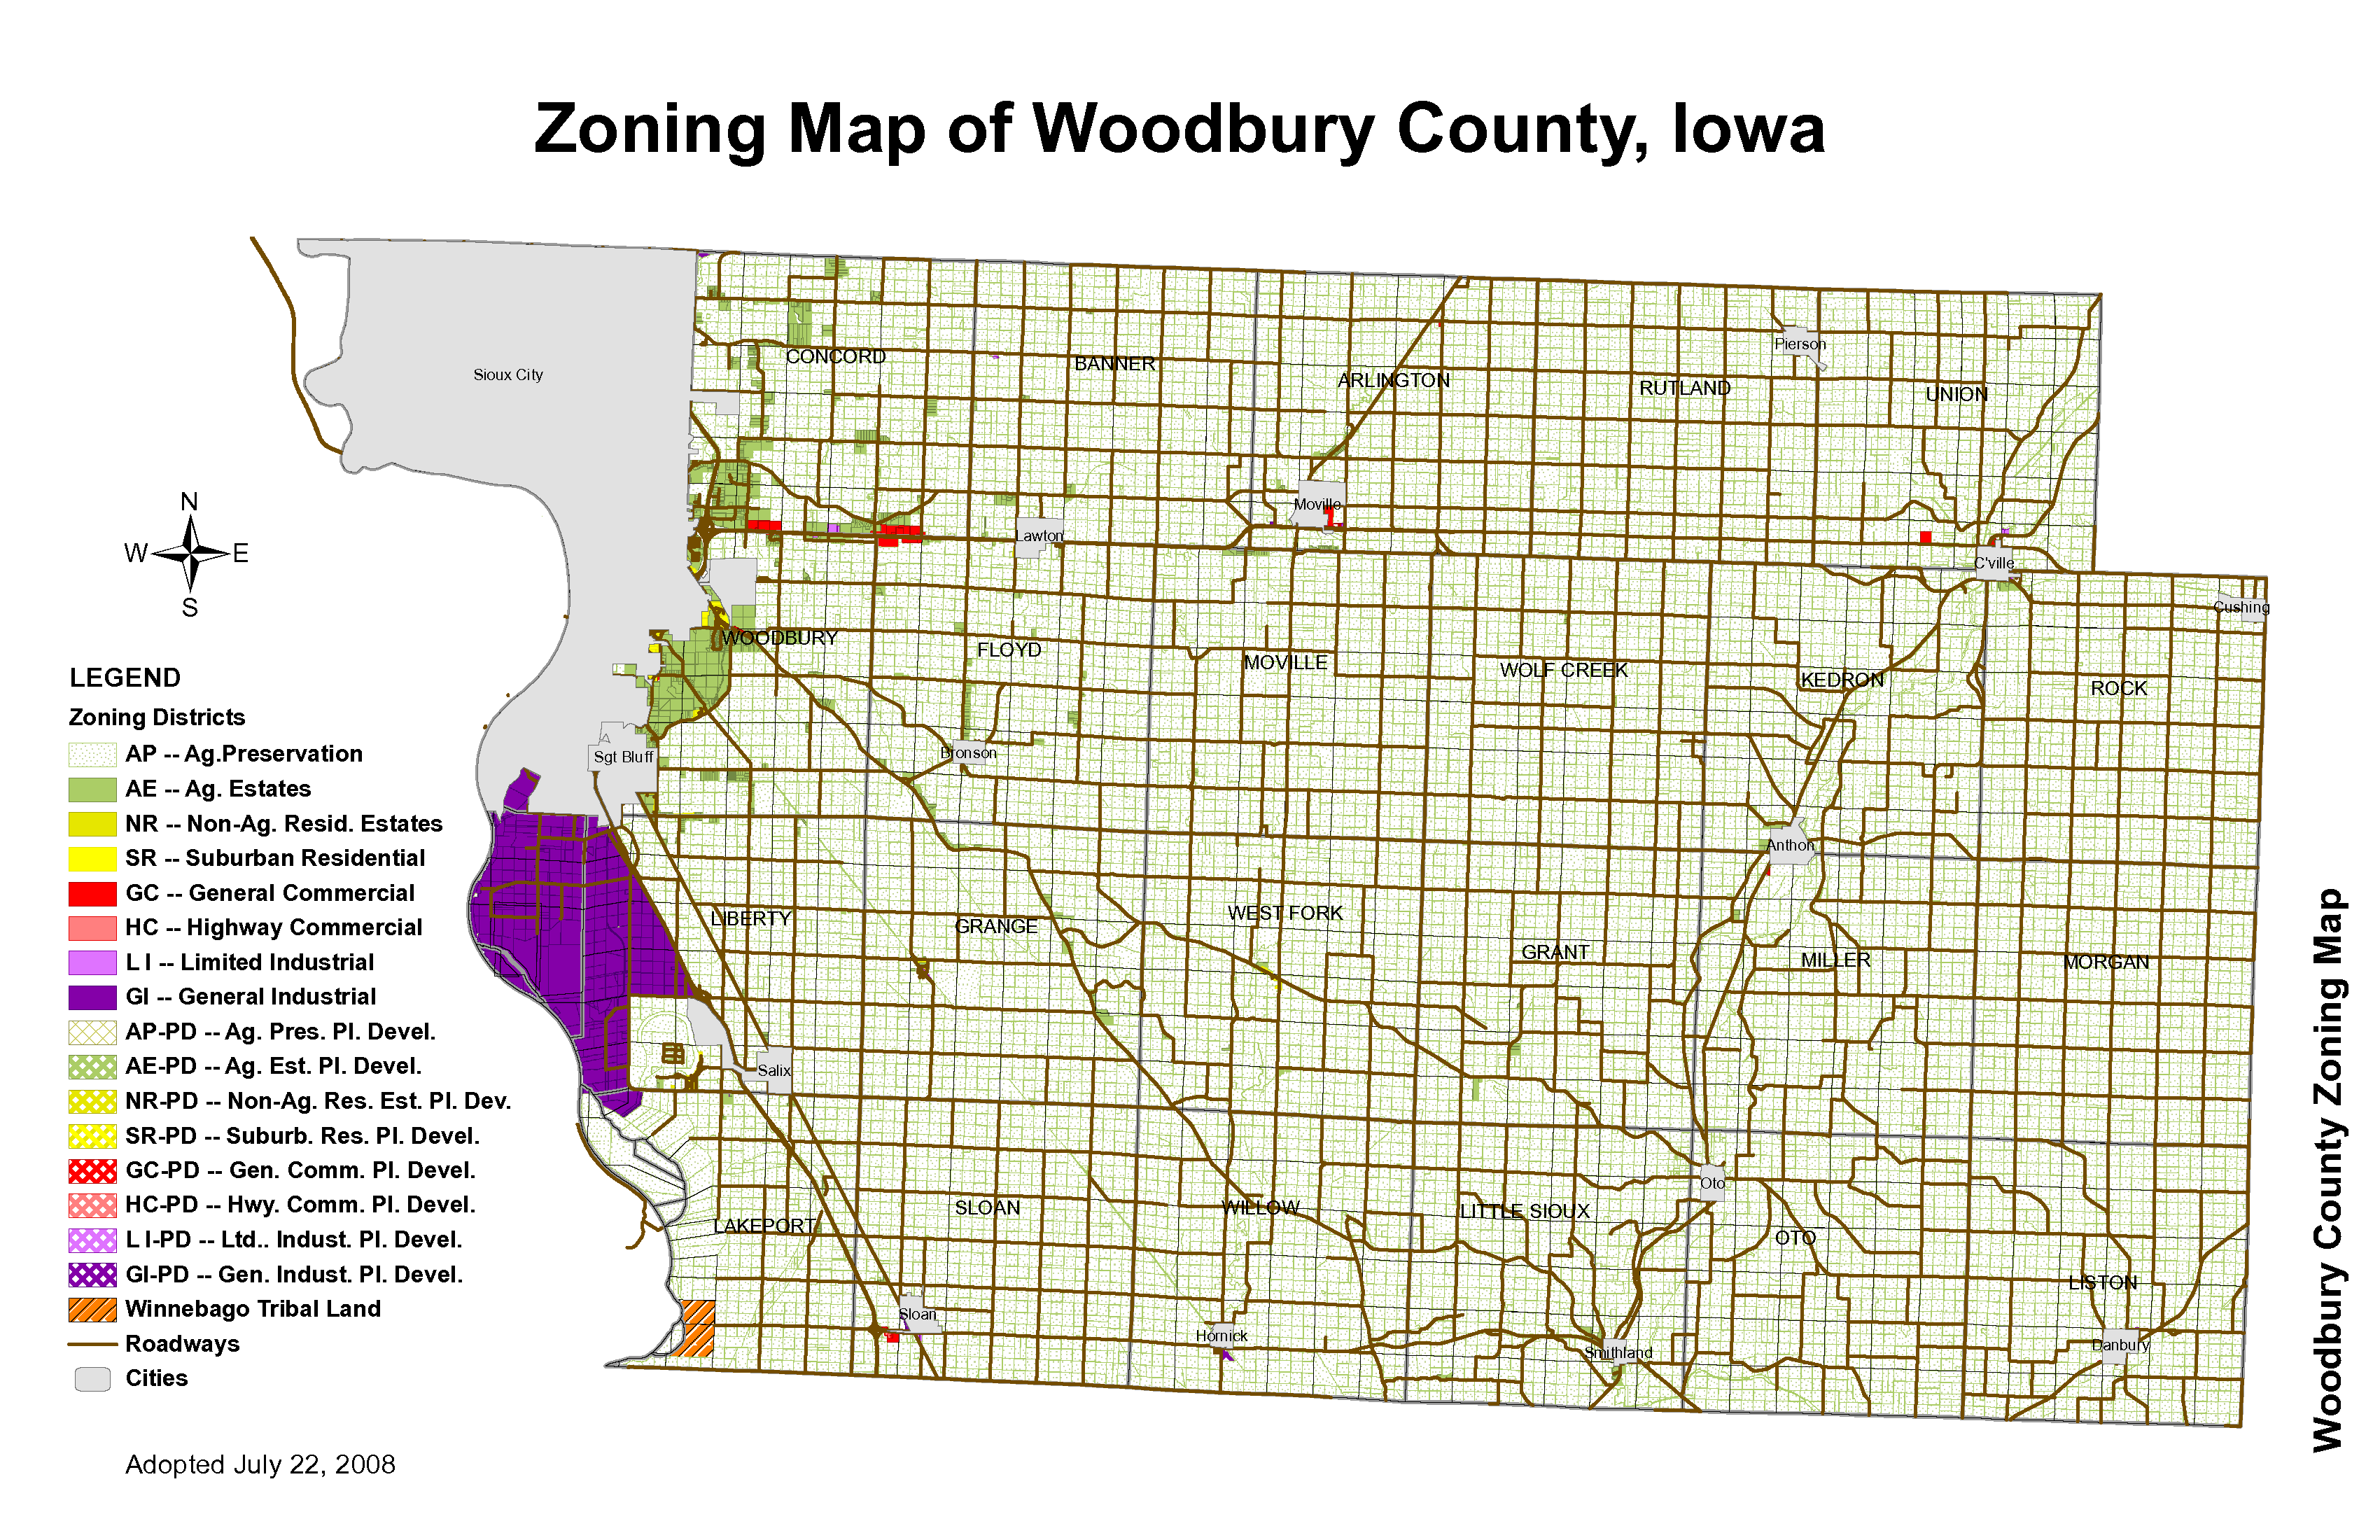 Zoning District Map - Woodbury County, Iowa